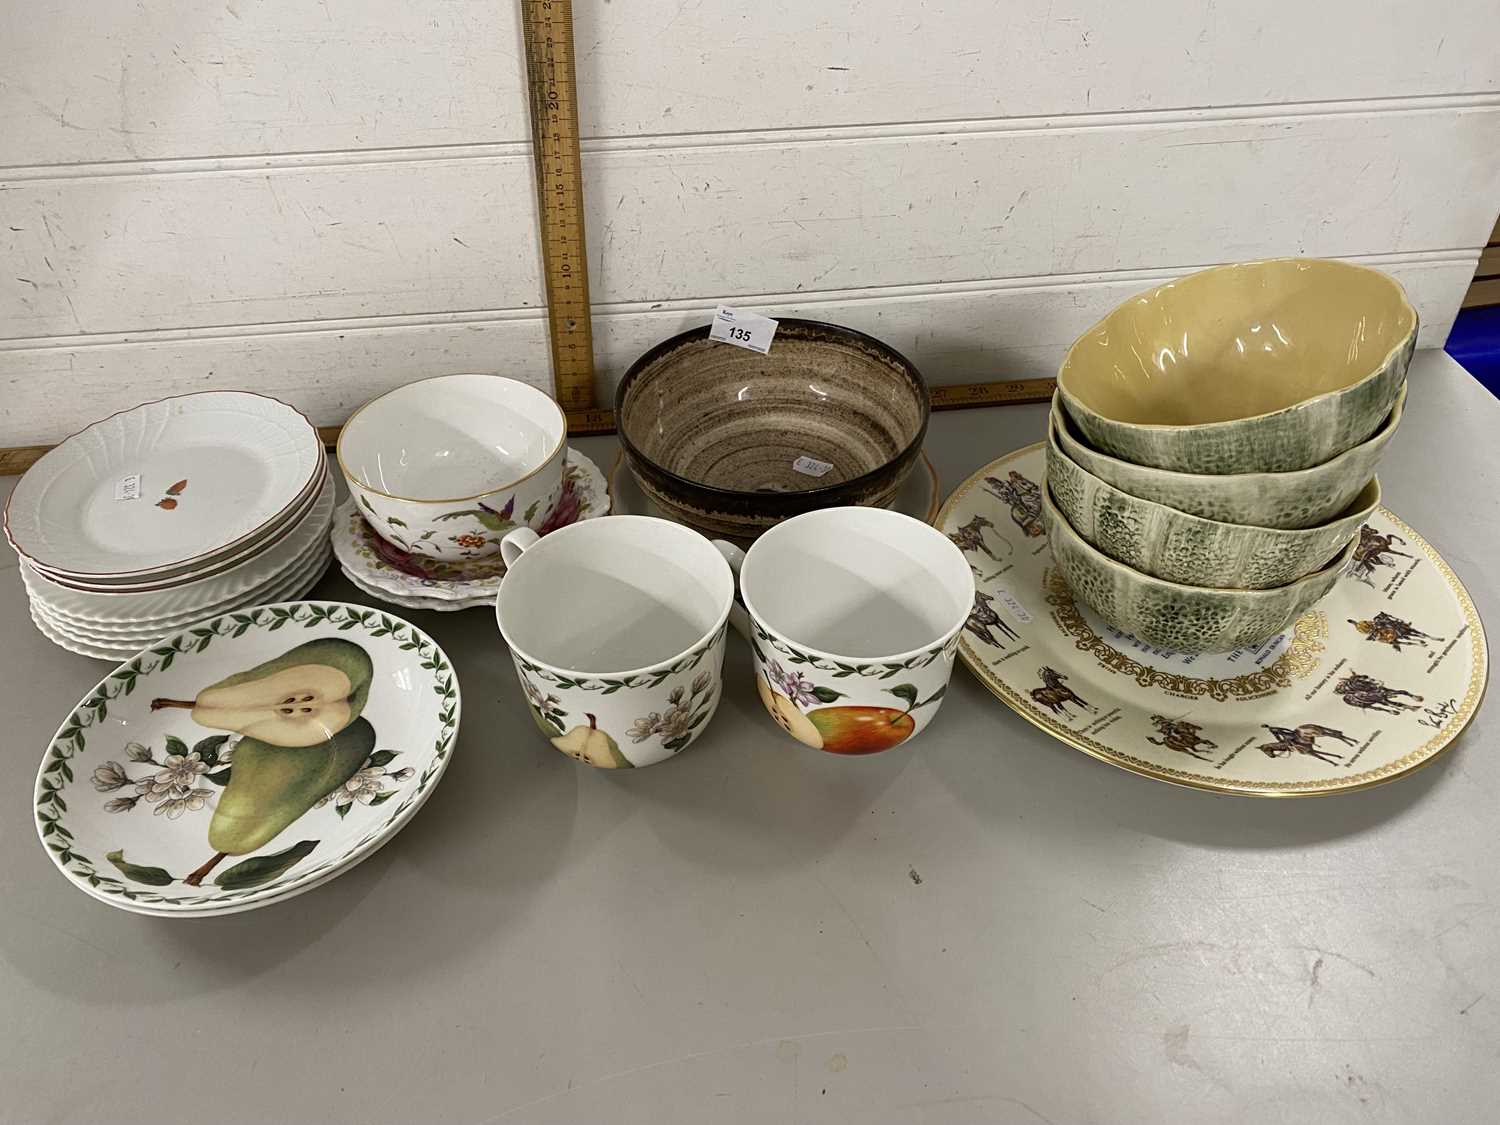 Mixed Lot: Various decorated bowls and plates